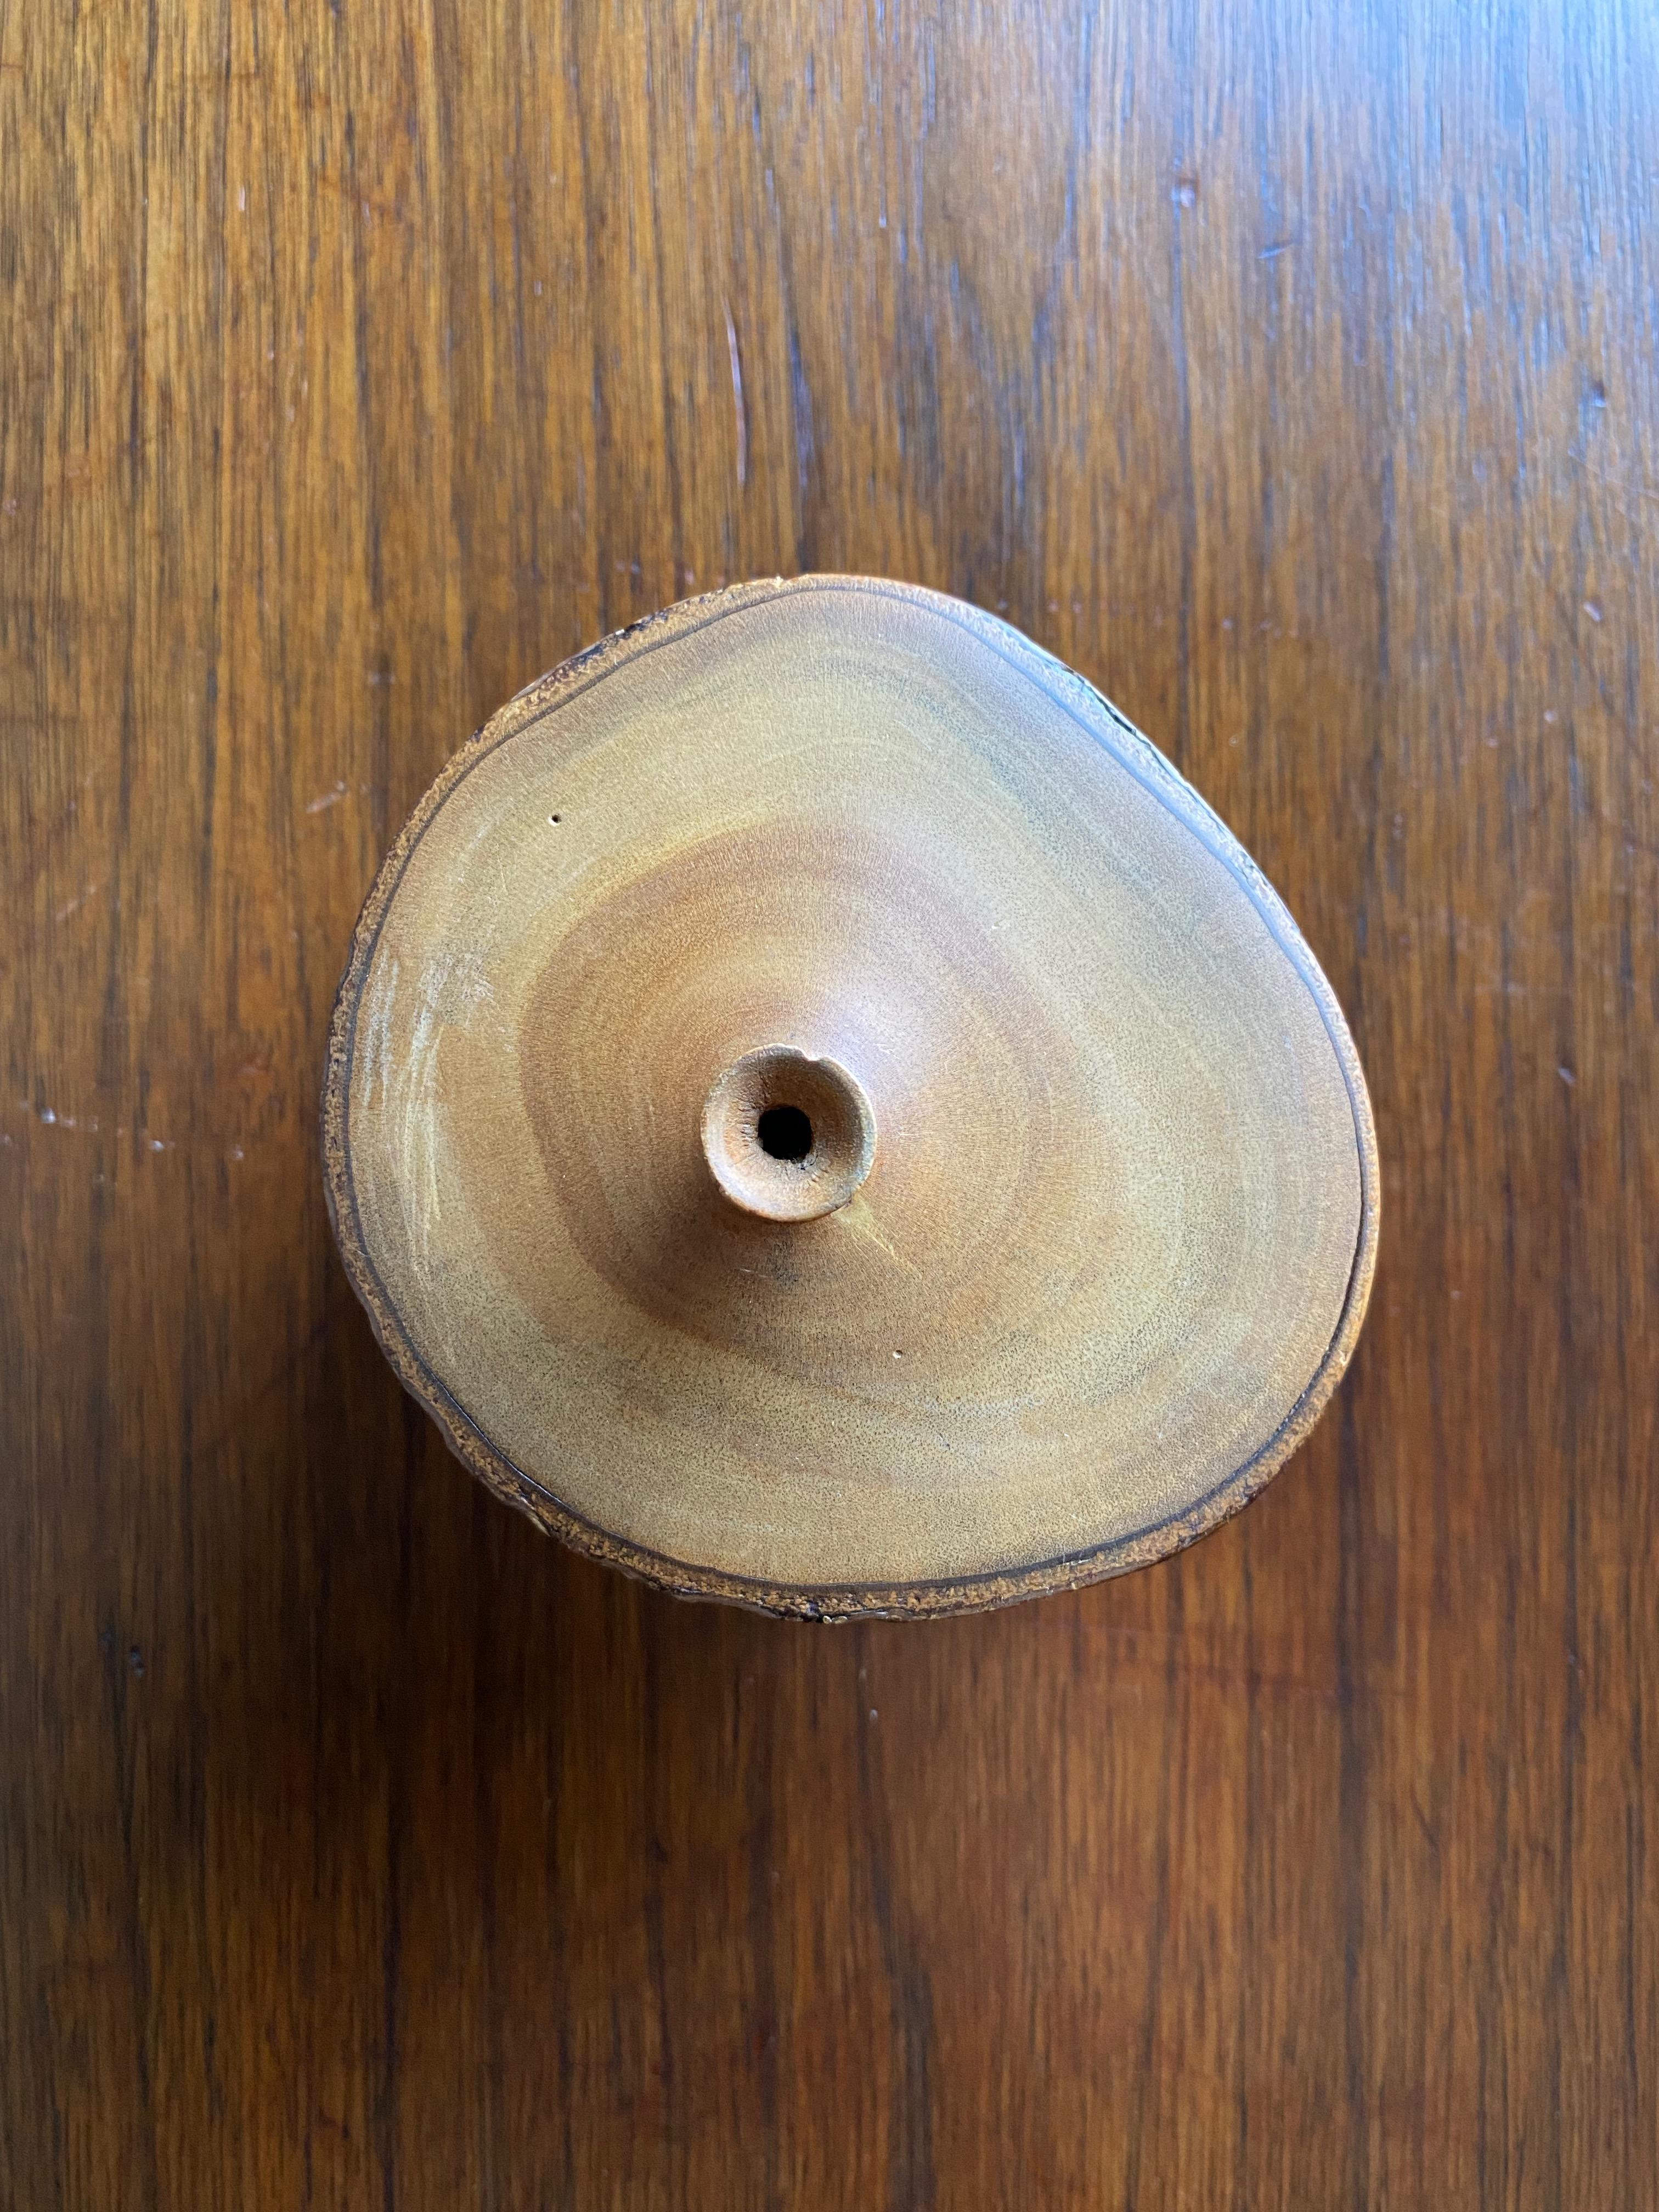 Hand turned wooden bud vase, circa 1979.